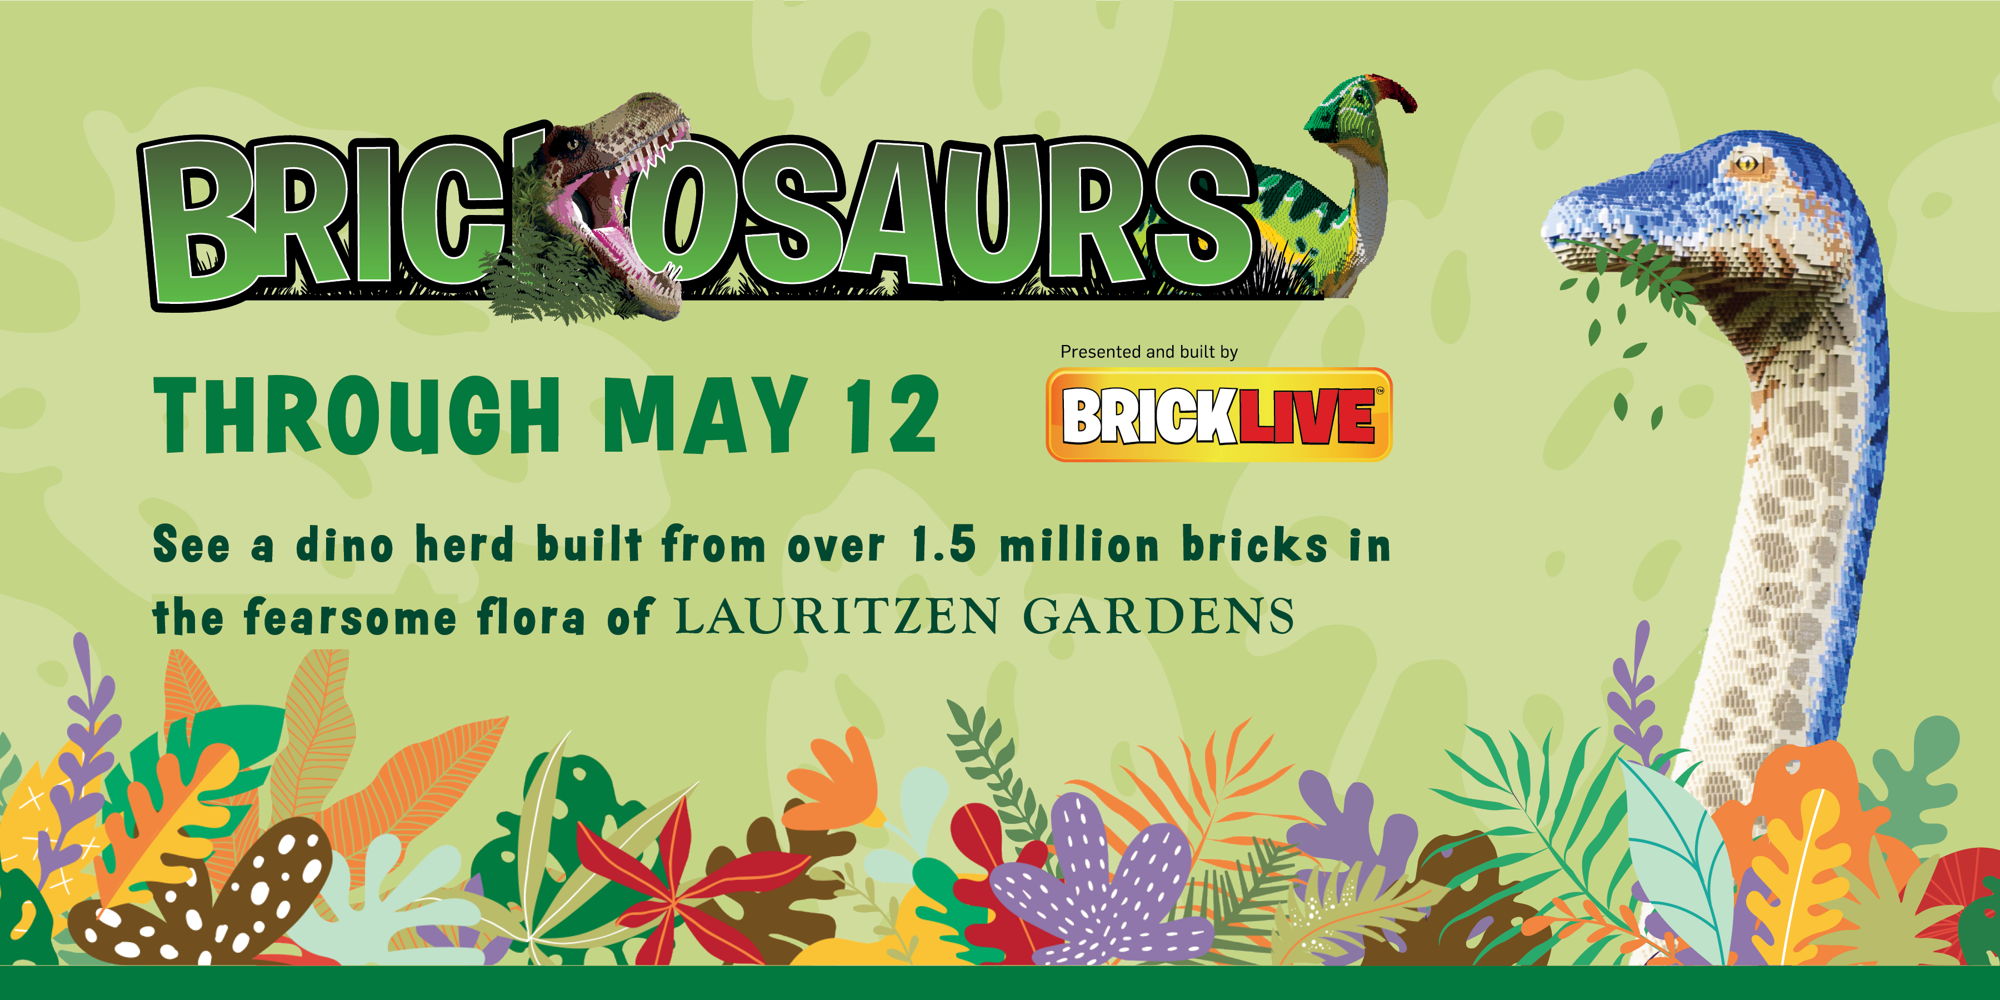 BRICKLIVE Brickosaurs promotional image